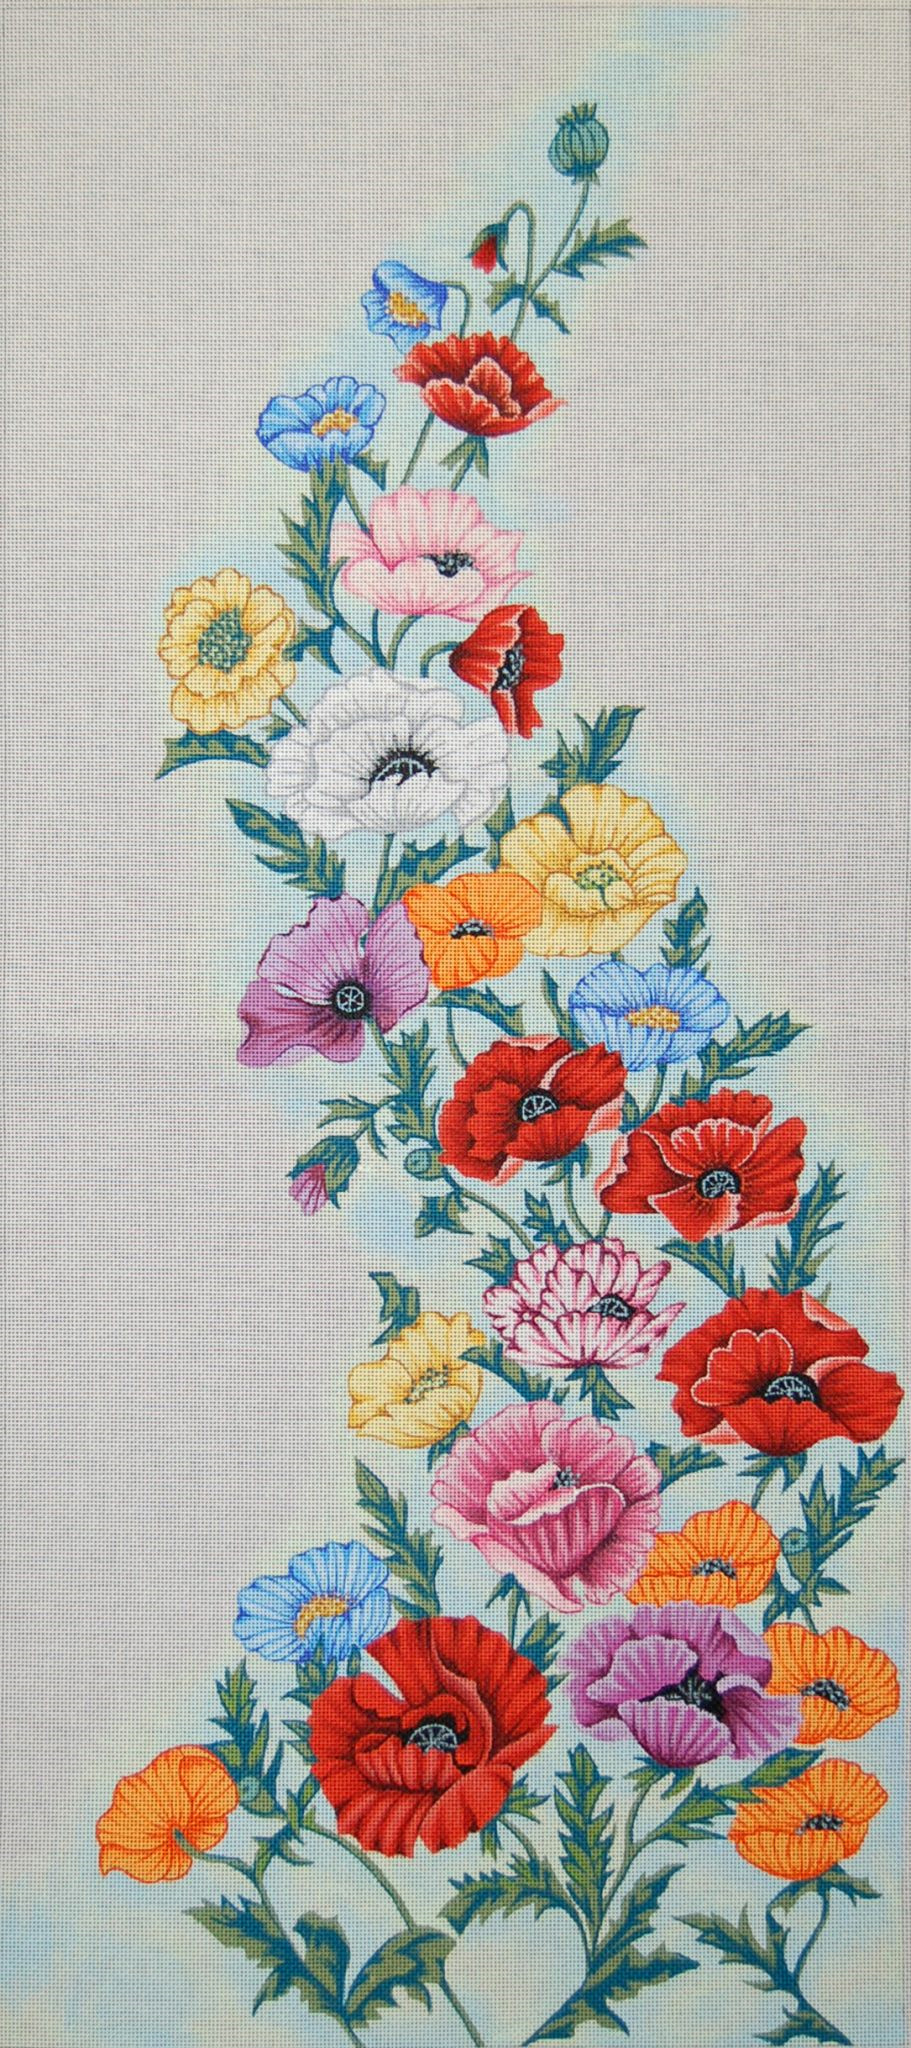 Flowers wall art Vintage wall art Floral wall art Needlepoint tapestry Cross stitch flowers Wiehler gobelin Poppies 27x20 Unframed